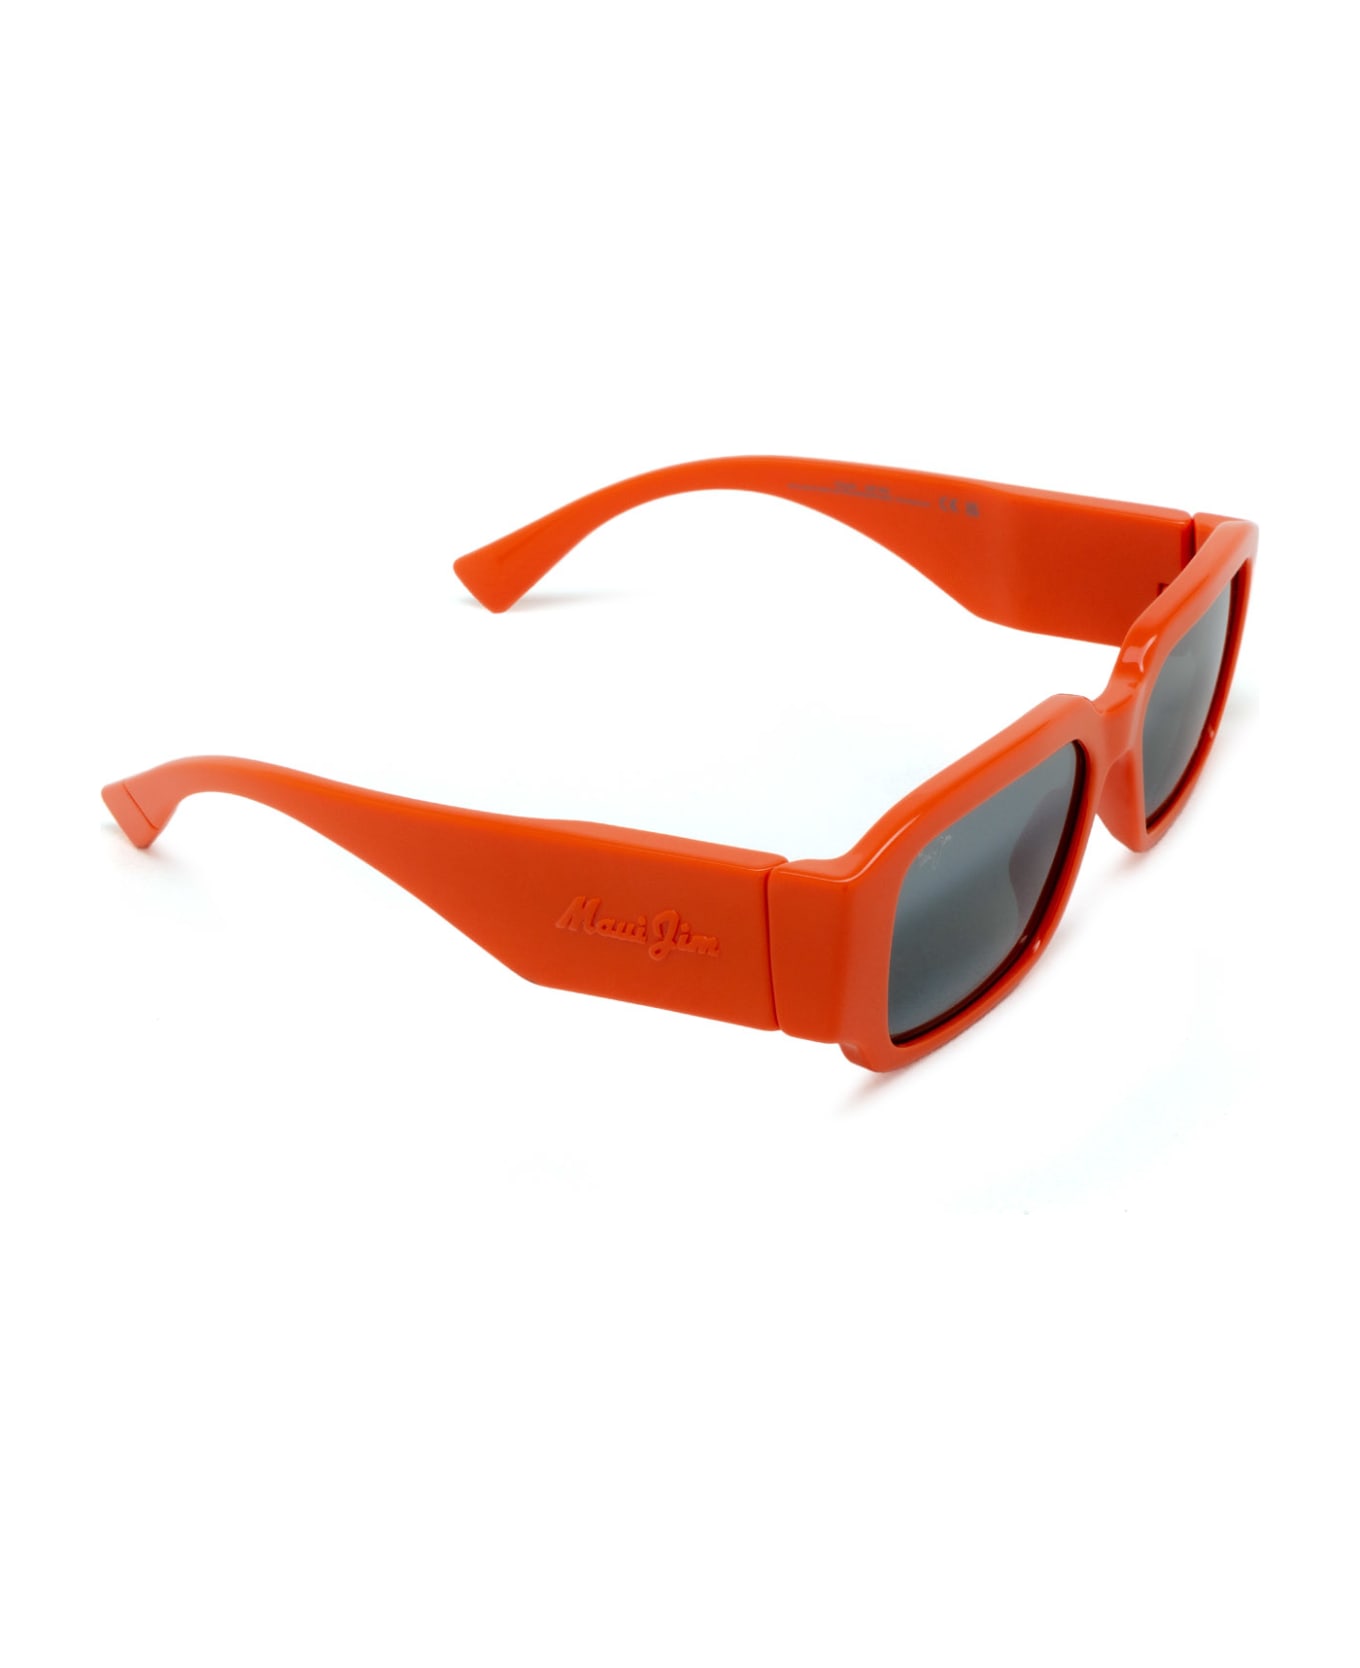 Maui Jim Mj639 Shiny Orange Sunglasses - Shiny Orange サングラス